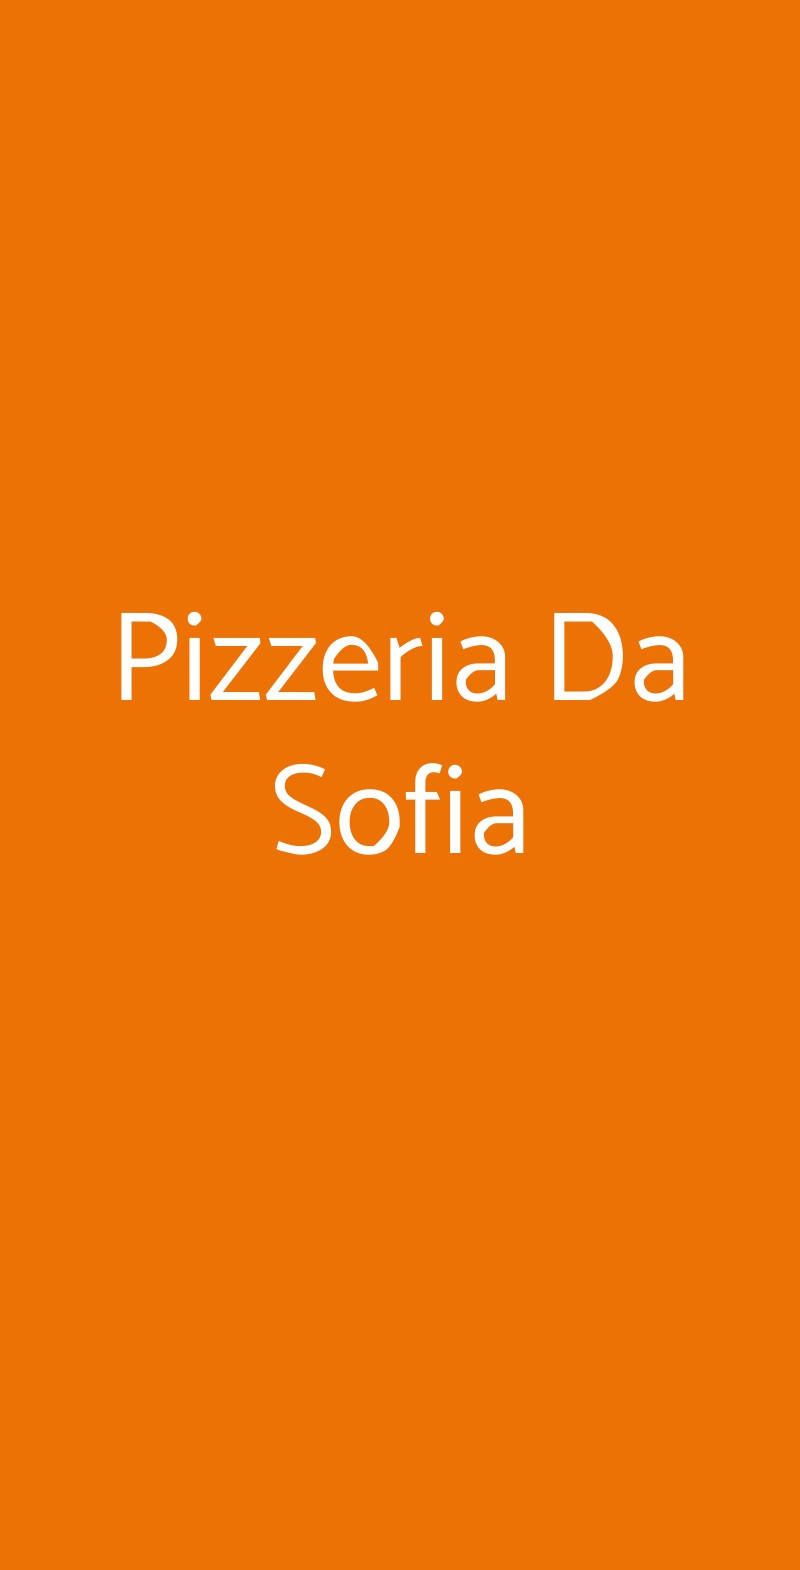 Pizzeria Da Sofia Napoli menù 1 pagina